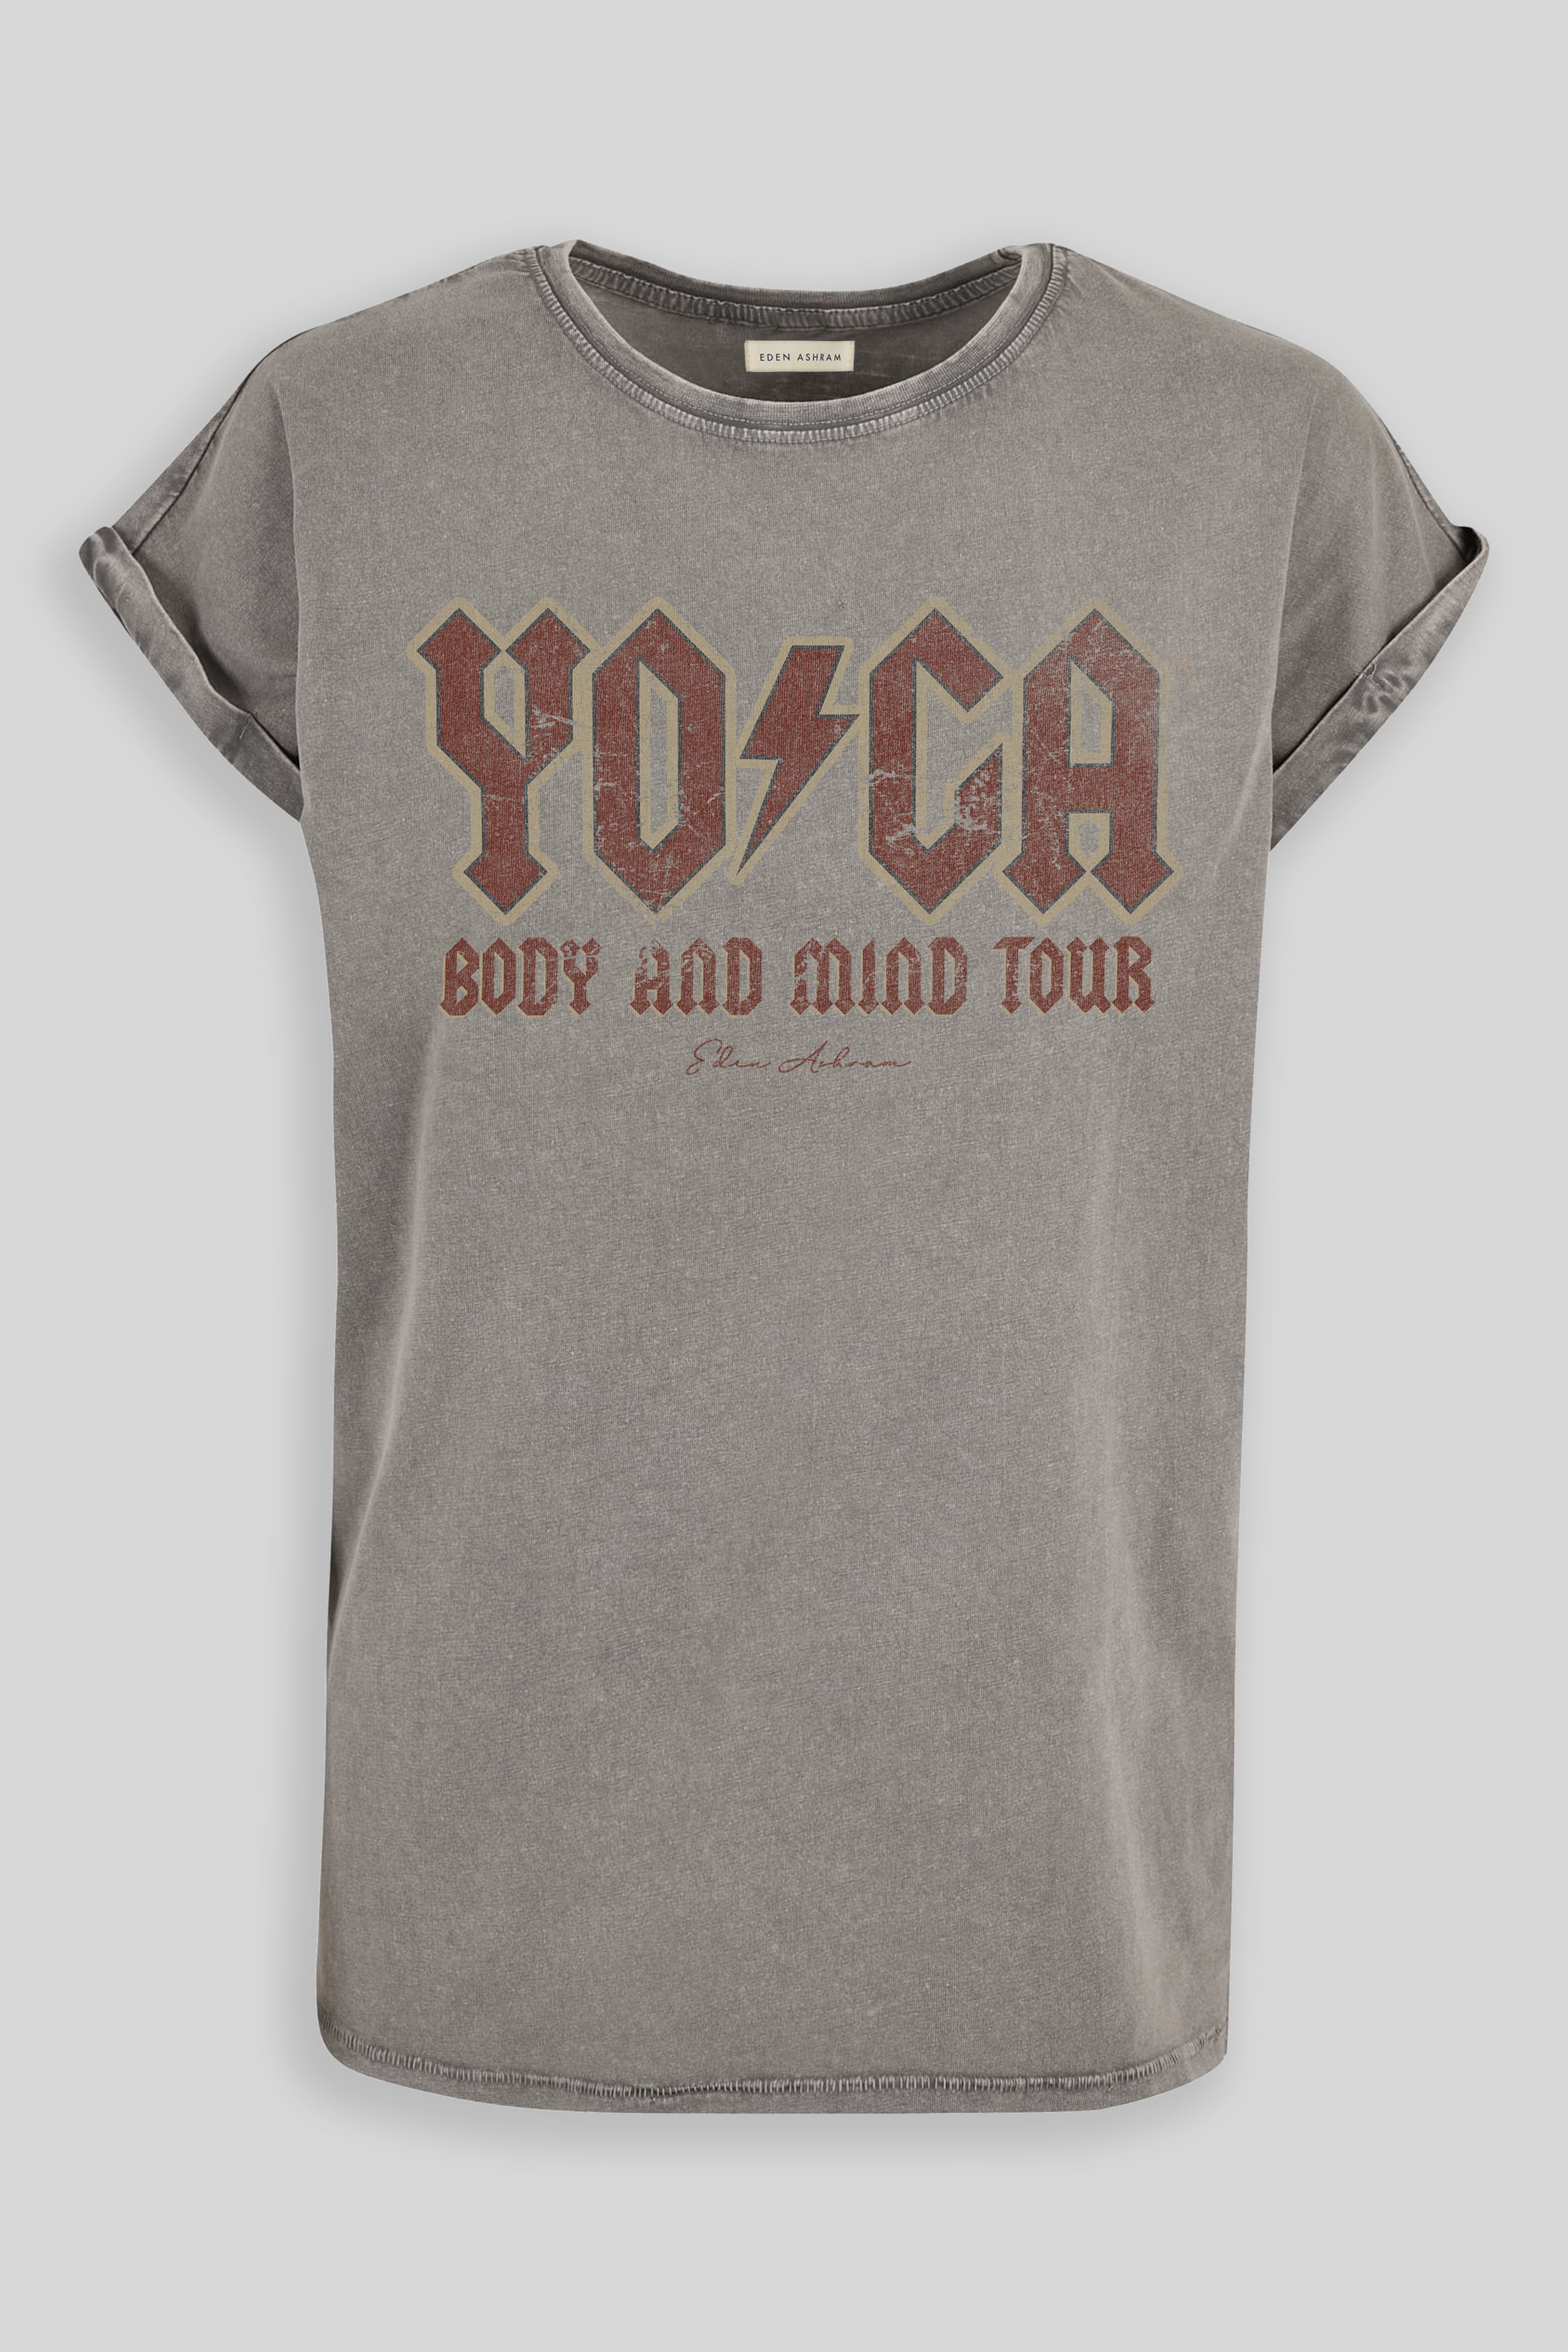 EDEN ASHRAM YOGA Tour Premium Relaxed Boyfriend T-Shirt Acid Wash Grey